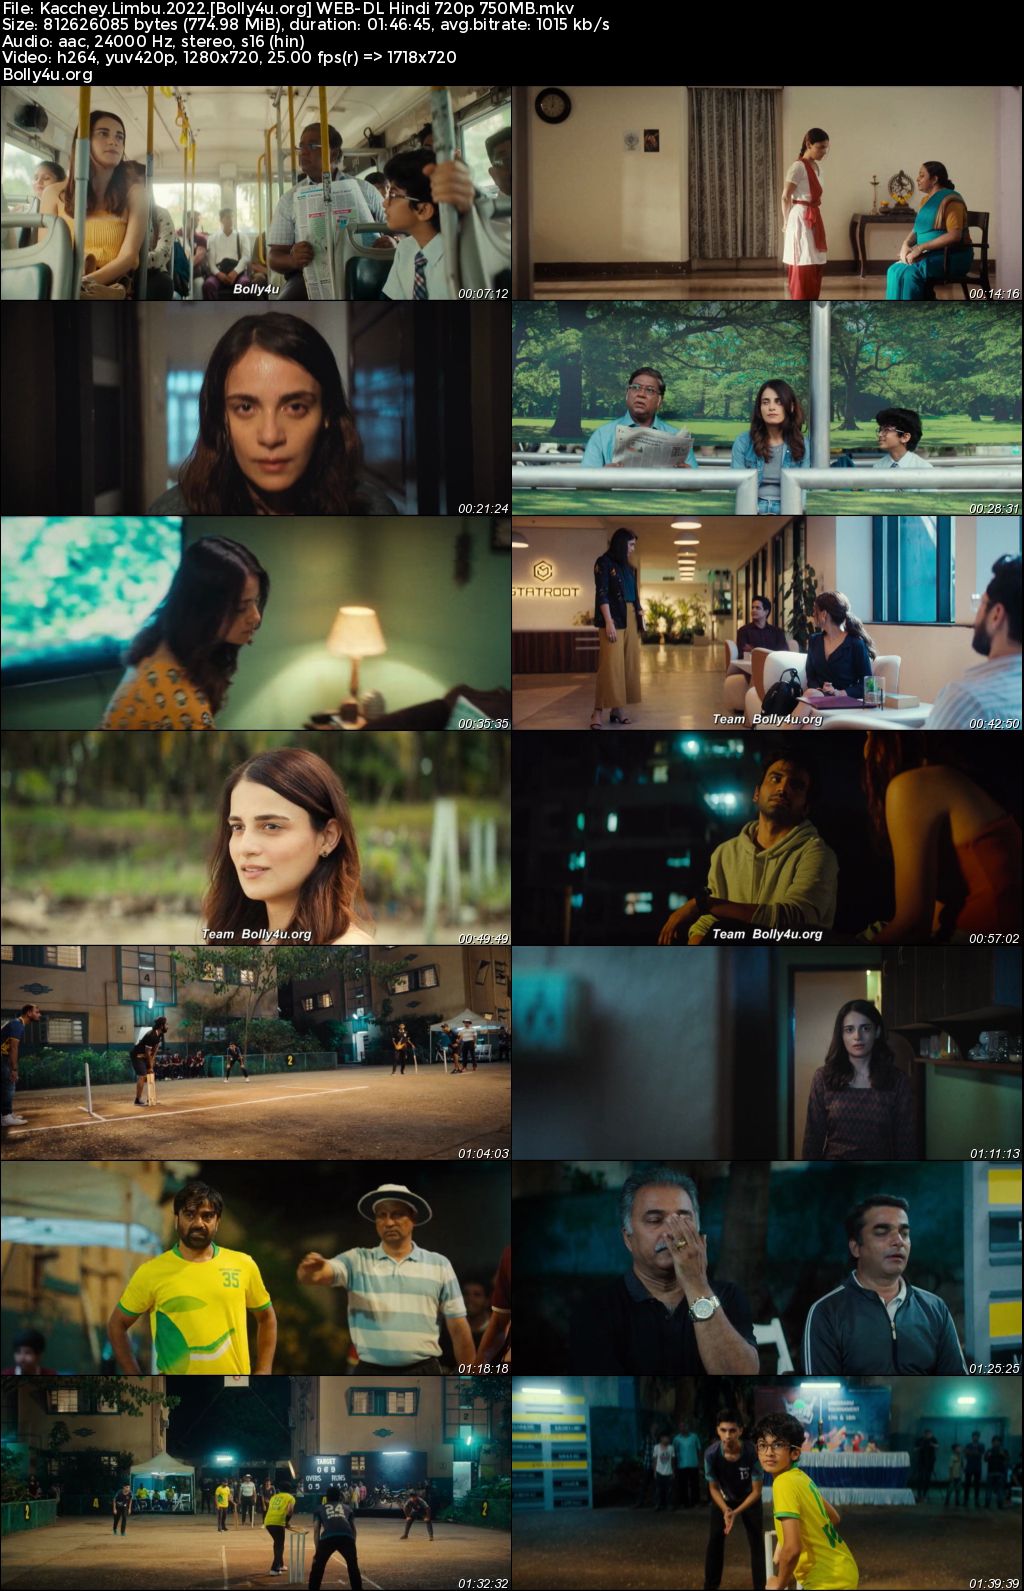 Kacchey Limbu 2022 WEB-DL Hindi Full Movie Download 1080p 720p 480p